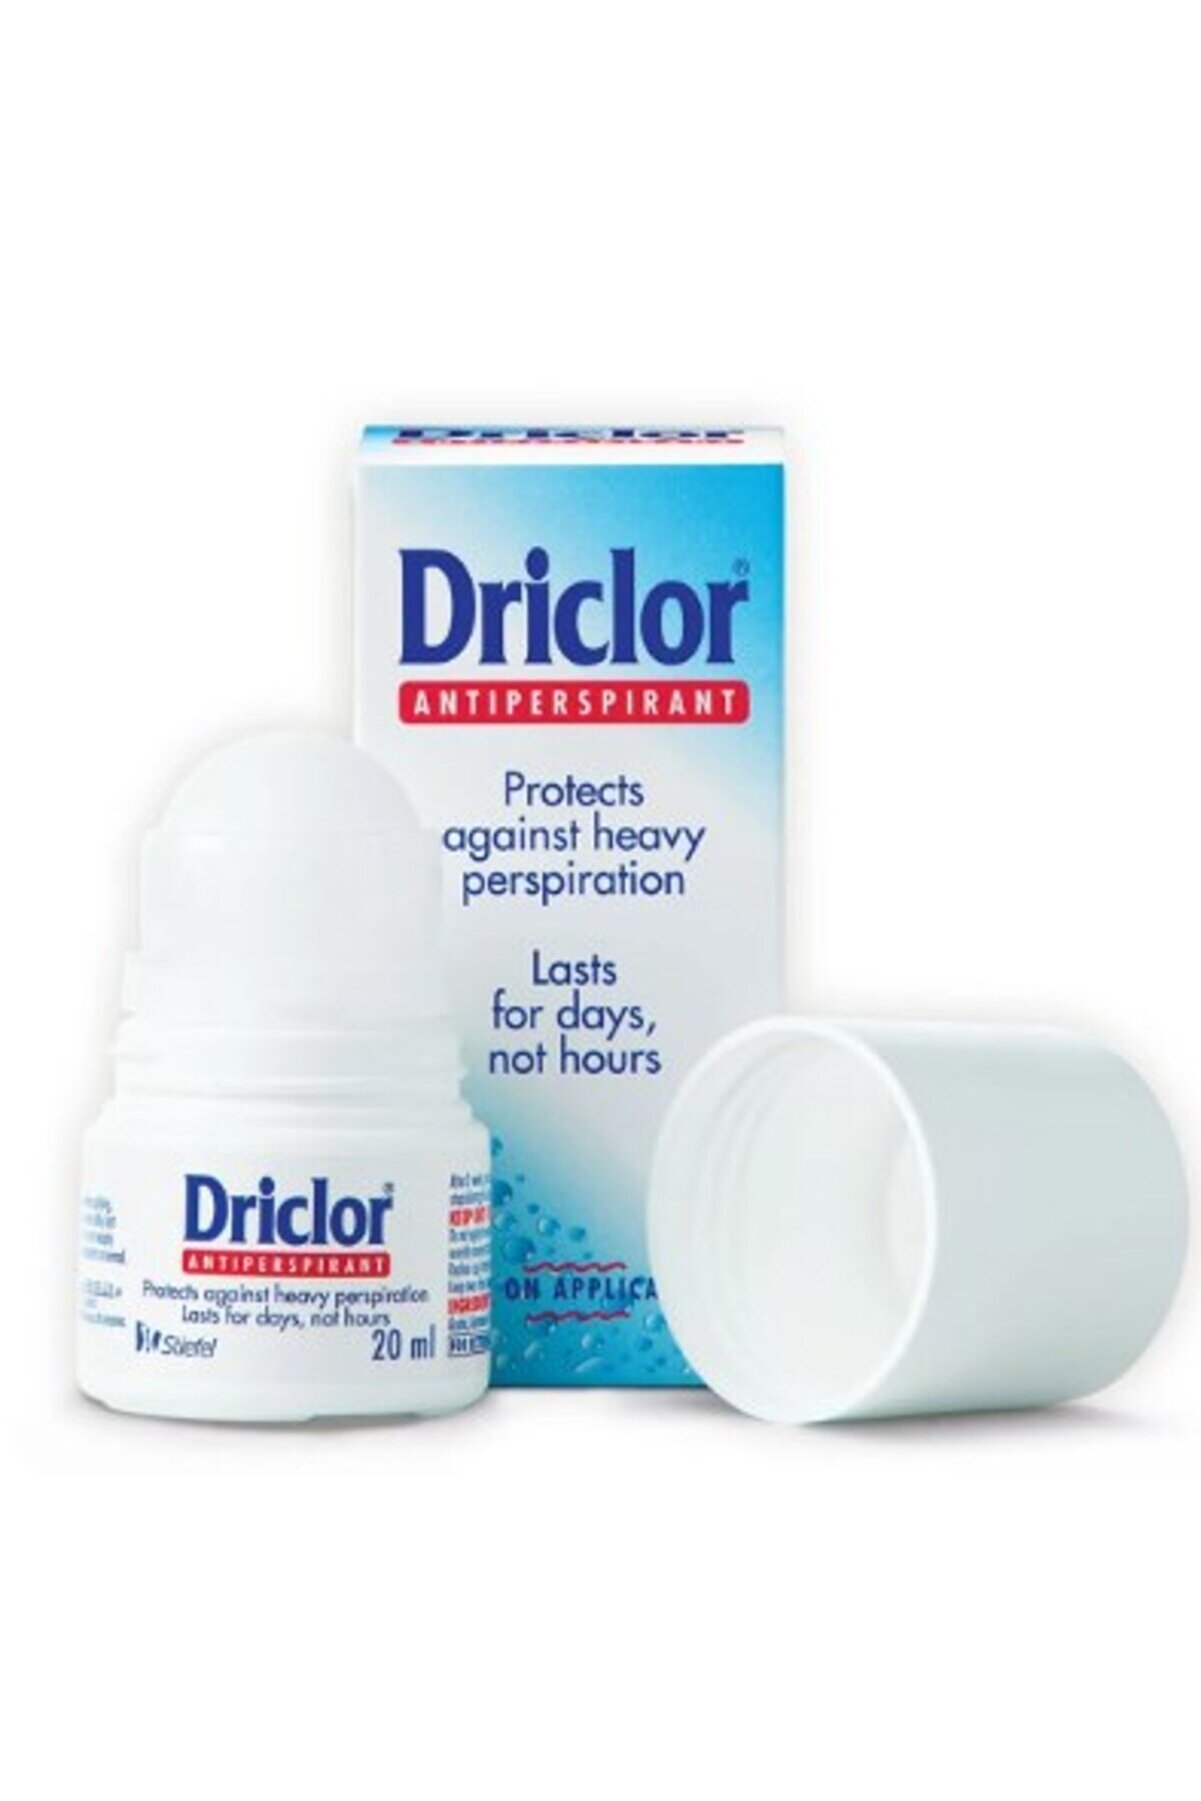 Driclor Antiperspirant Unisex Dry Roll-on Deodorant 20 ml. - image 3 of 6